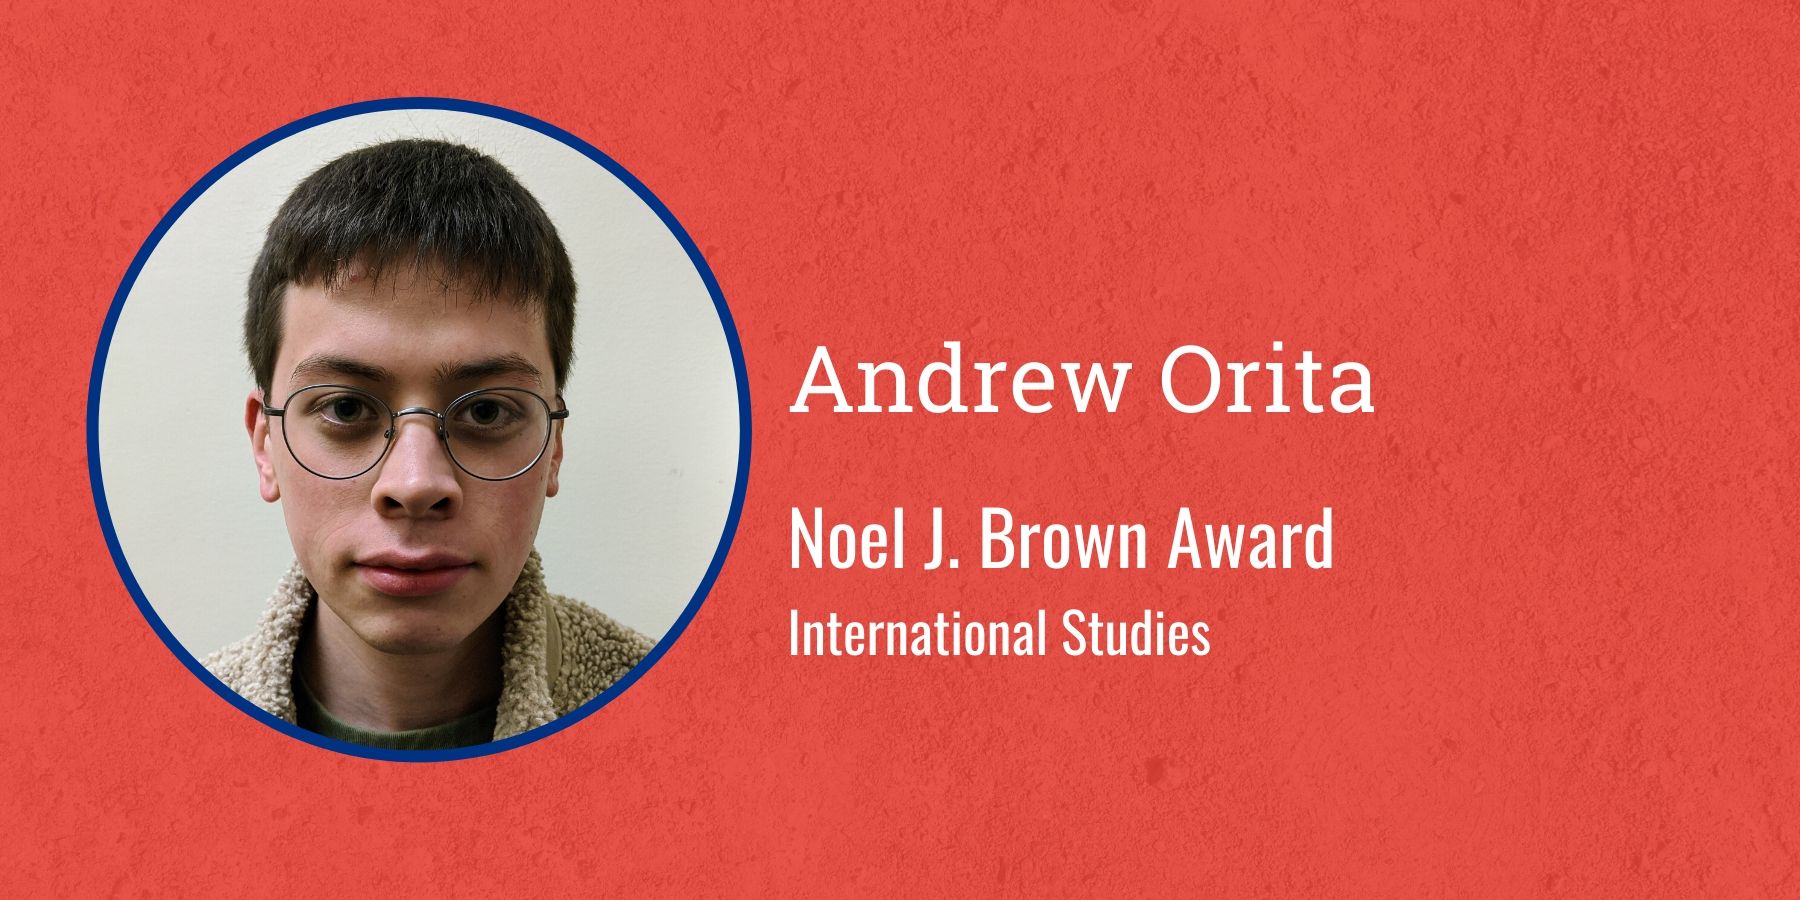 Photo of Andrew Orita and text Noel J. Brown Award, International Studies